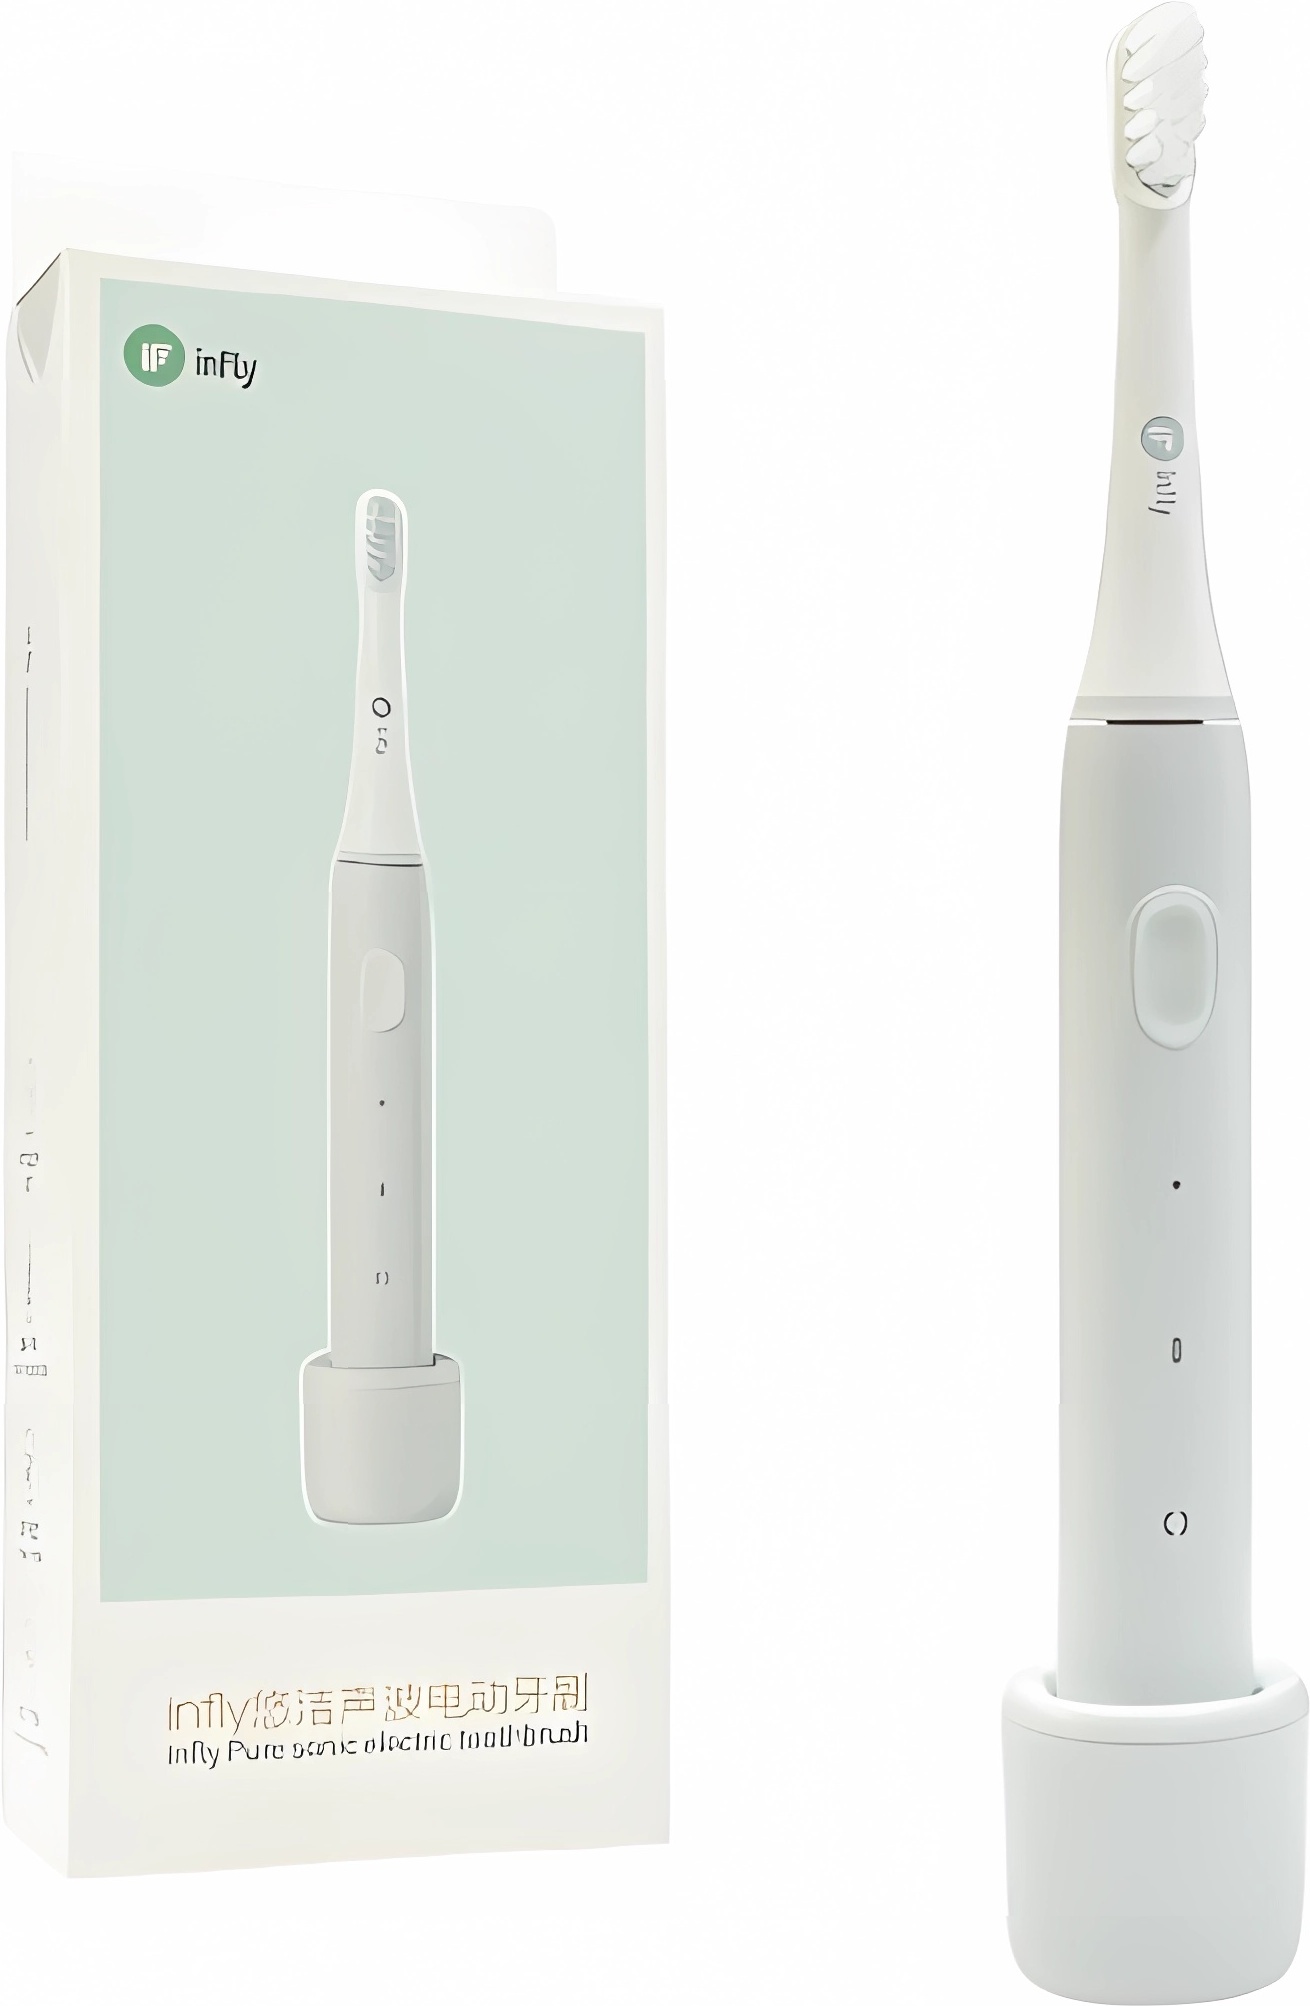 Электрическая зубная щетка Infly Electric Toothbrush P60 серый фен щетка pioneer hb 1006d 1200 вт серый зеленый